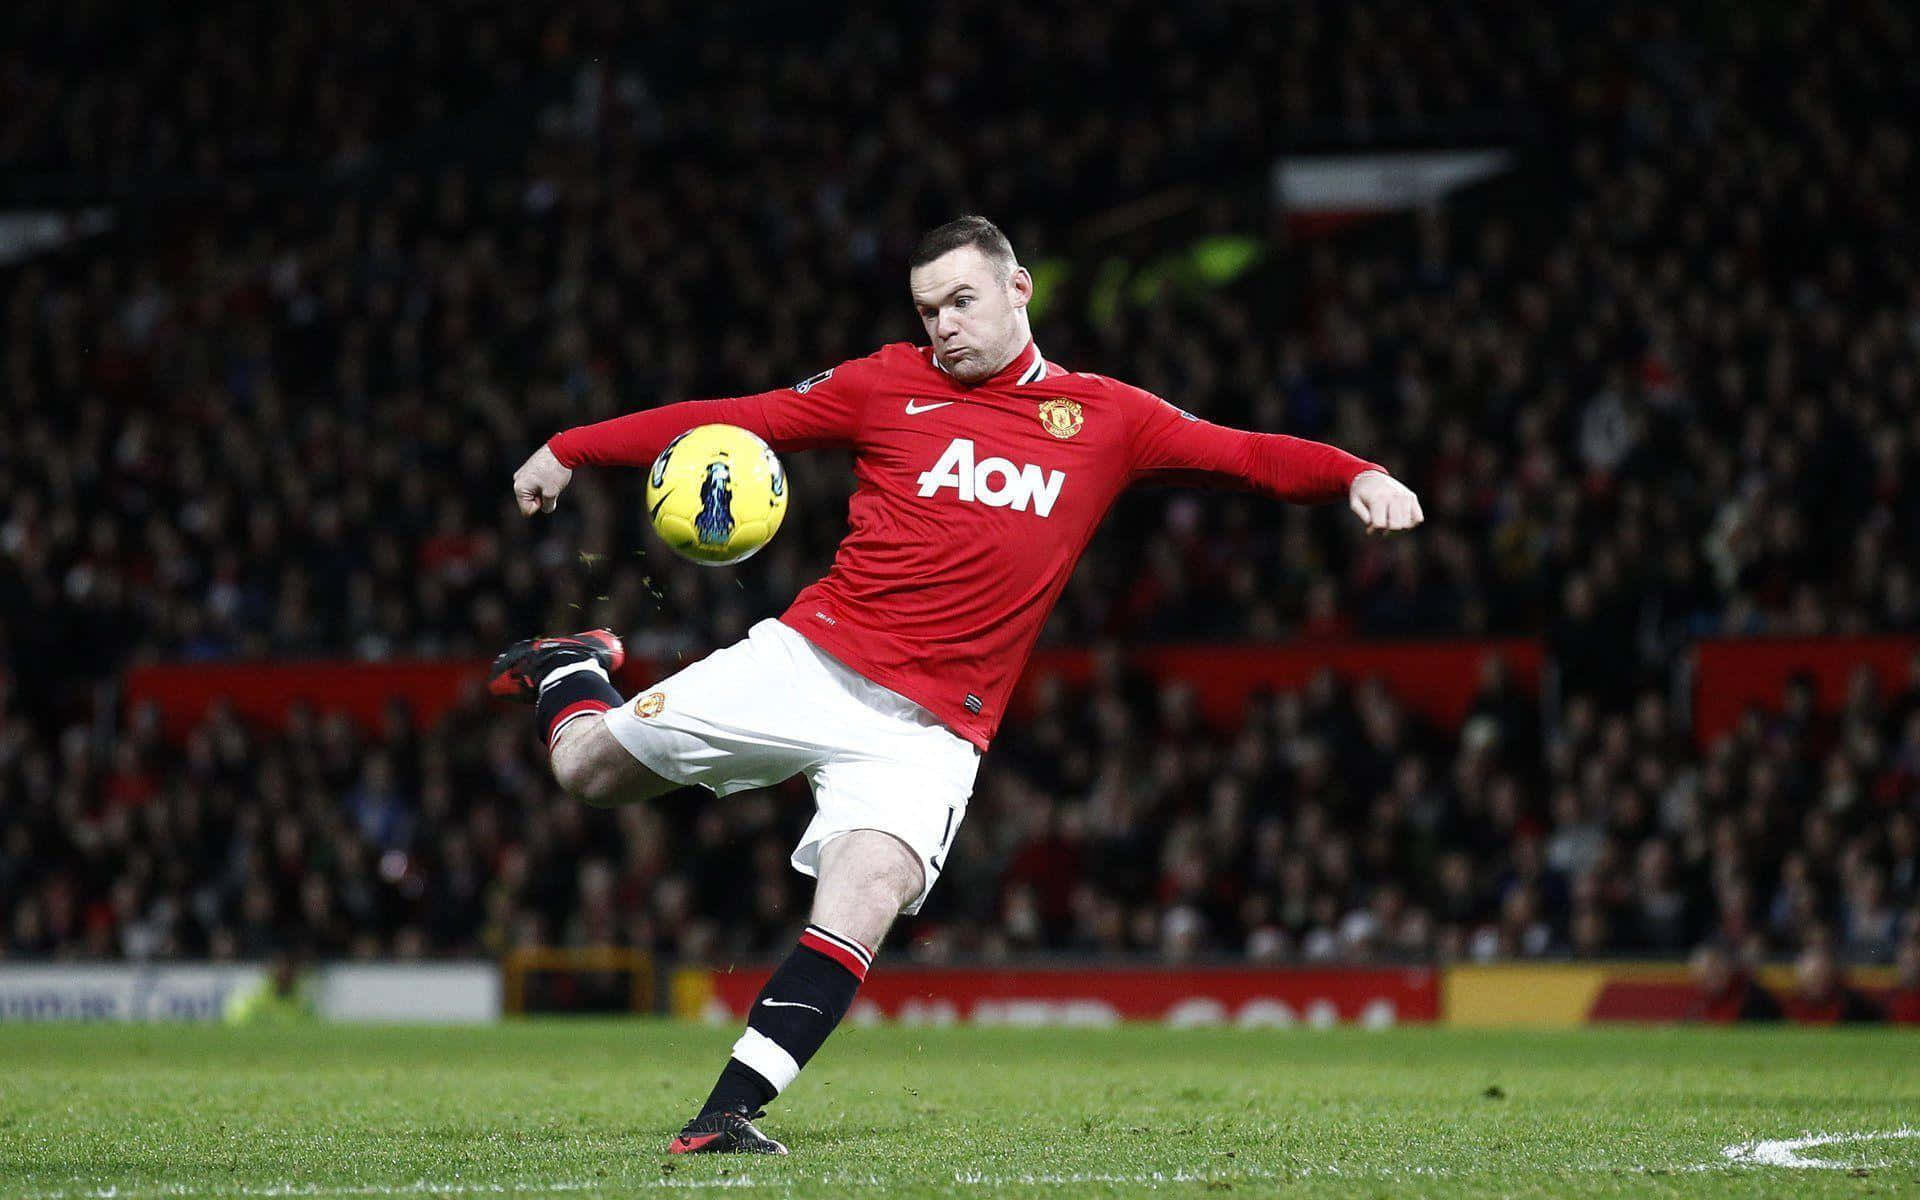 Wayne Rooney Kicks The Ball During A Game